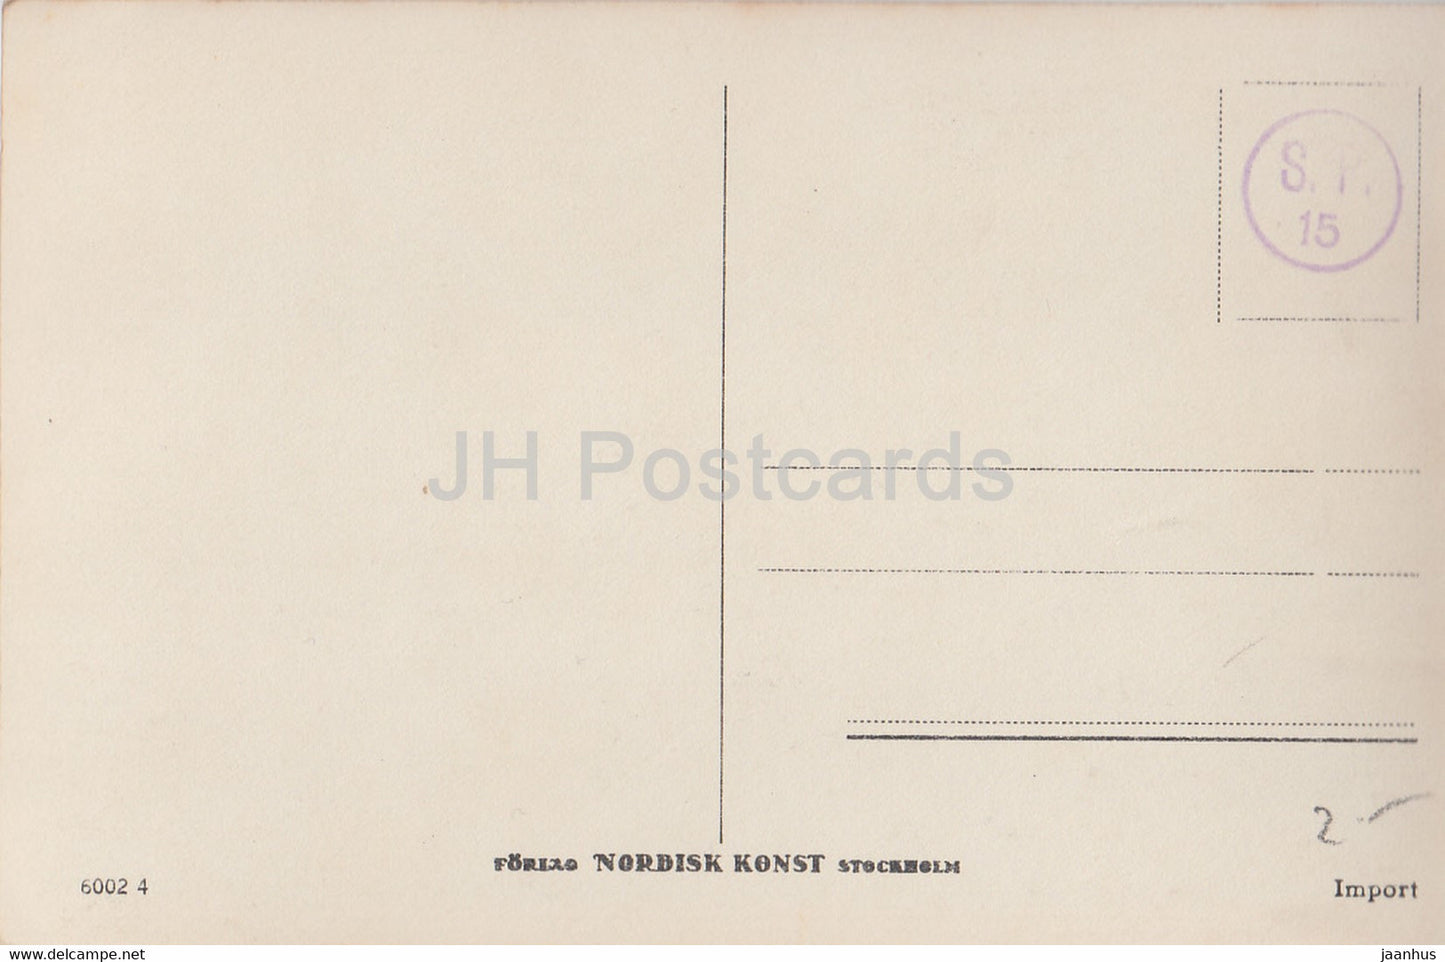 Goteborg - Tradgardsforeningen - Vaxthuset - carte postale ancienne - Suède - inutilisée